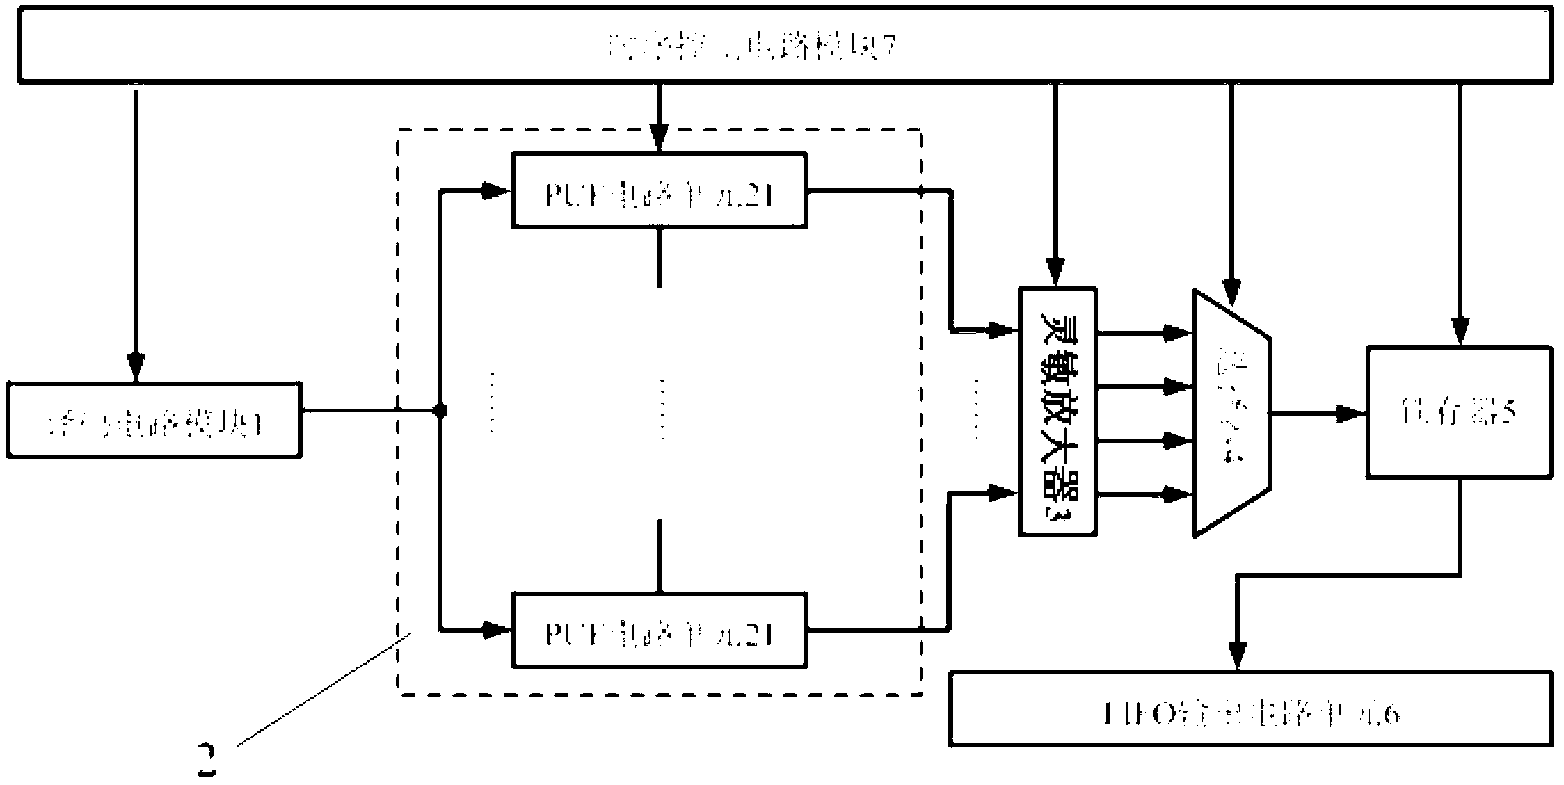 High-steady-state multi-port PUF (Poly Urethane Foam) circuit